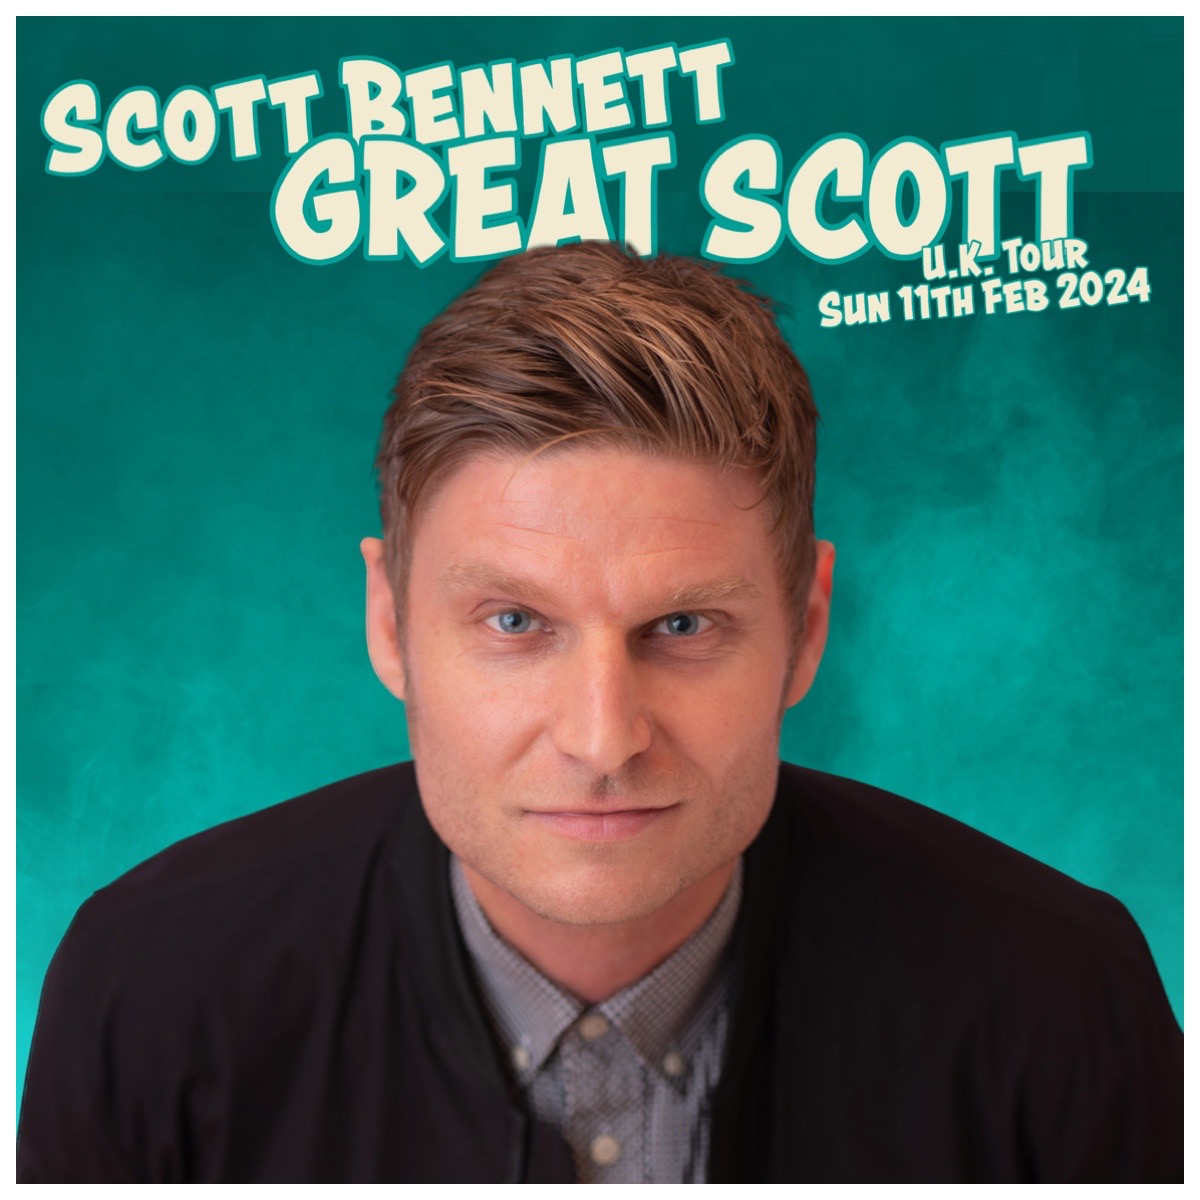 Scott Bennett Great Scott Tour Blackpool 11th Feb 2024